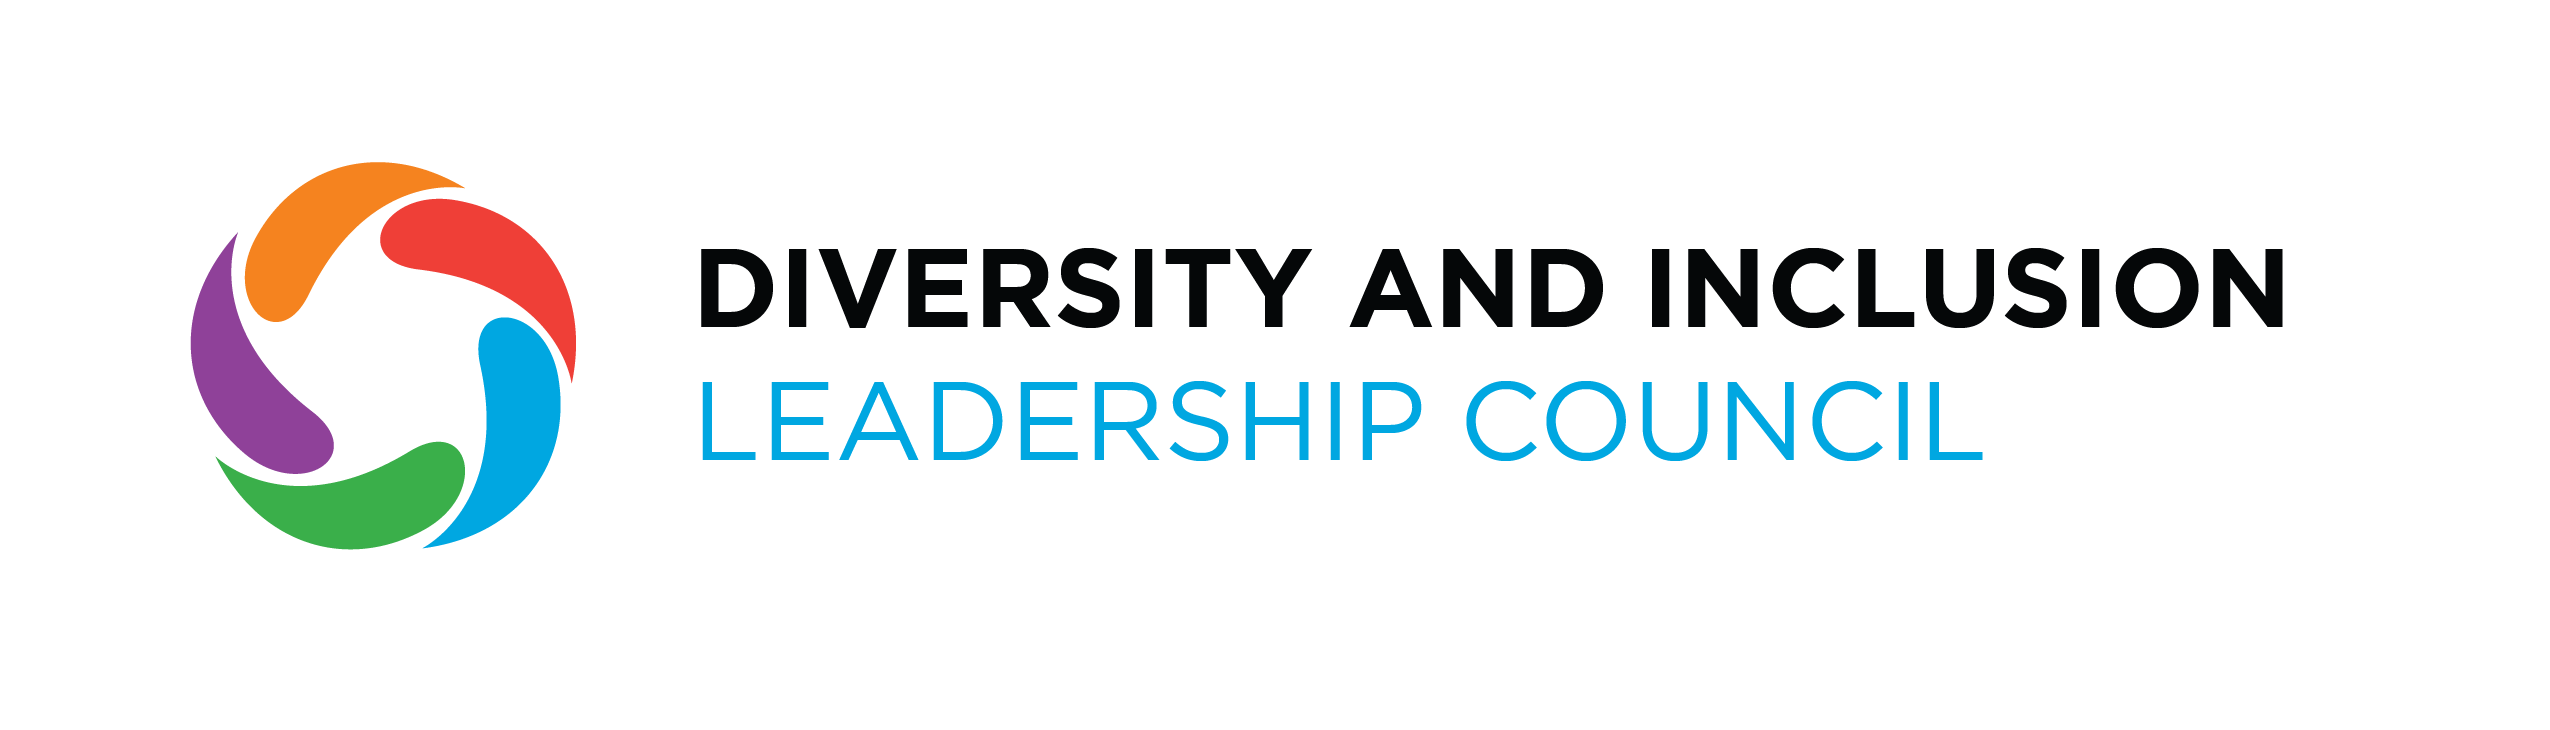 https://www.boardoftrade.com/programs/diversity-inclusion-leadership-council